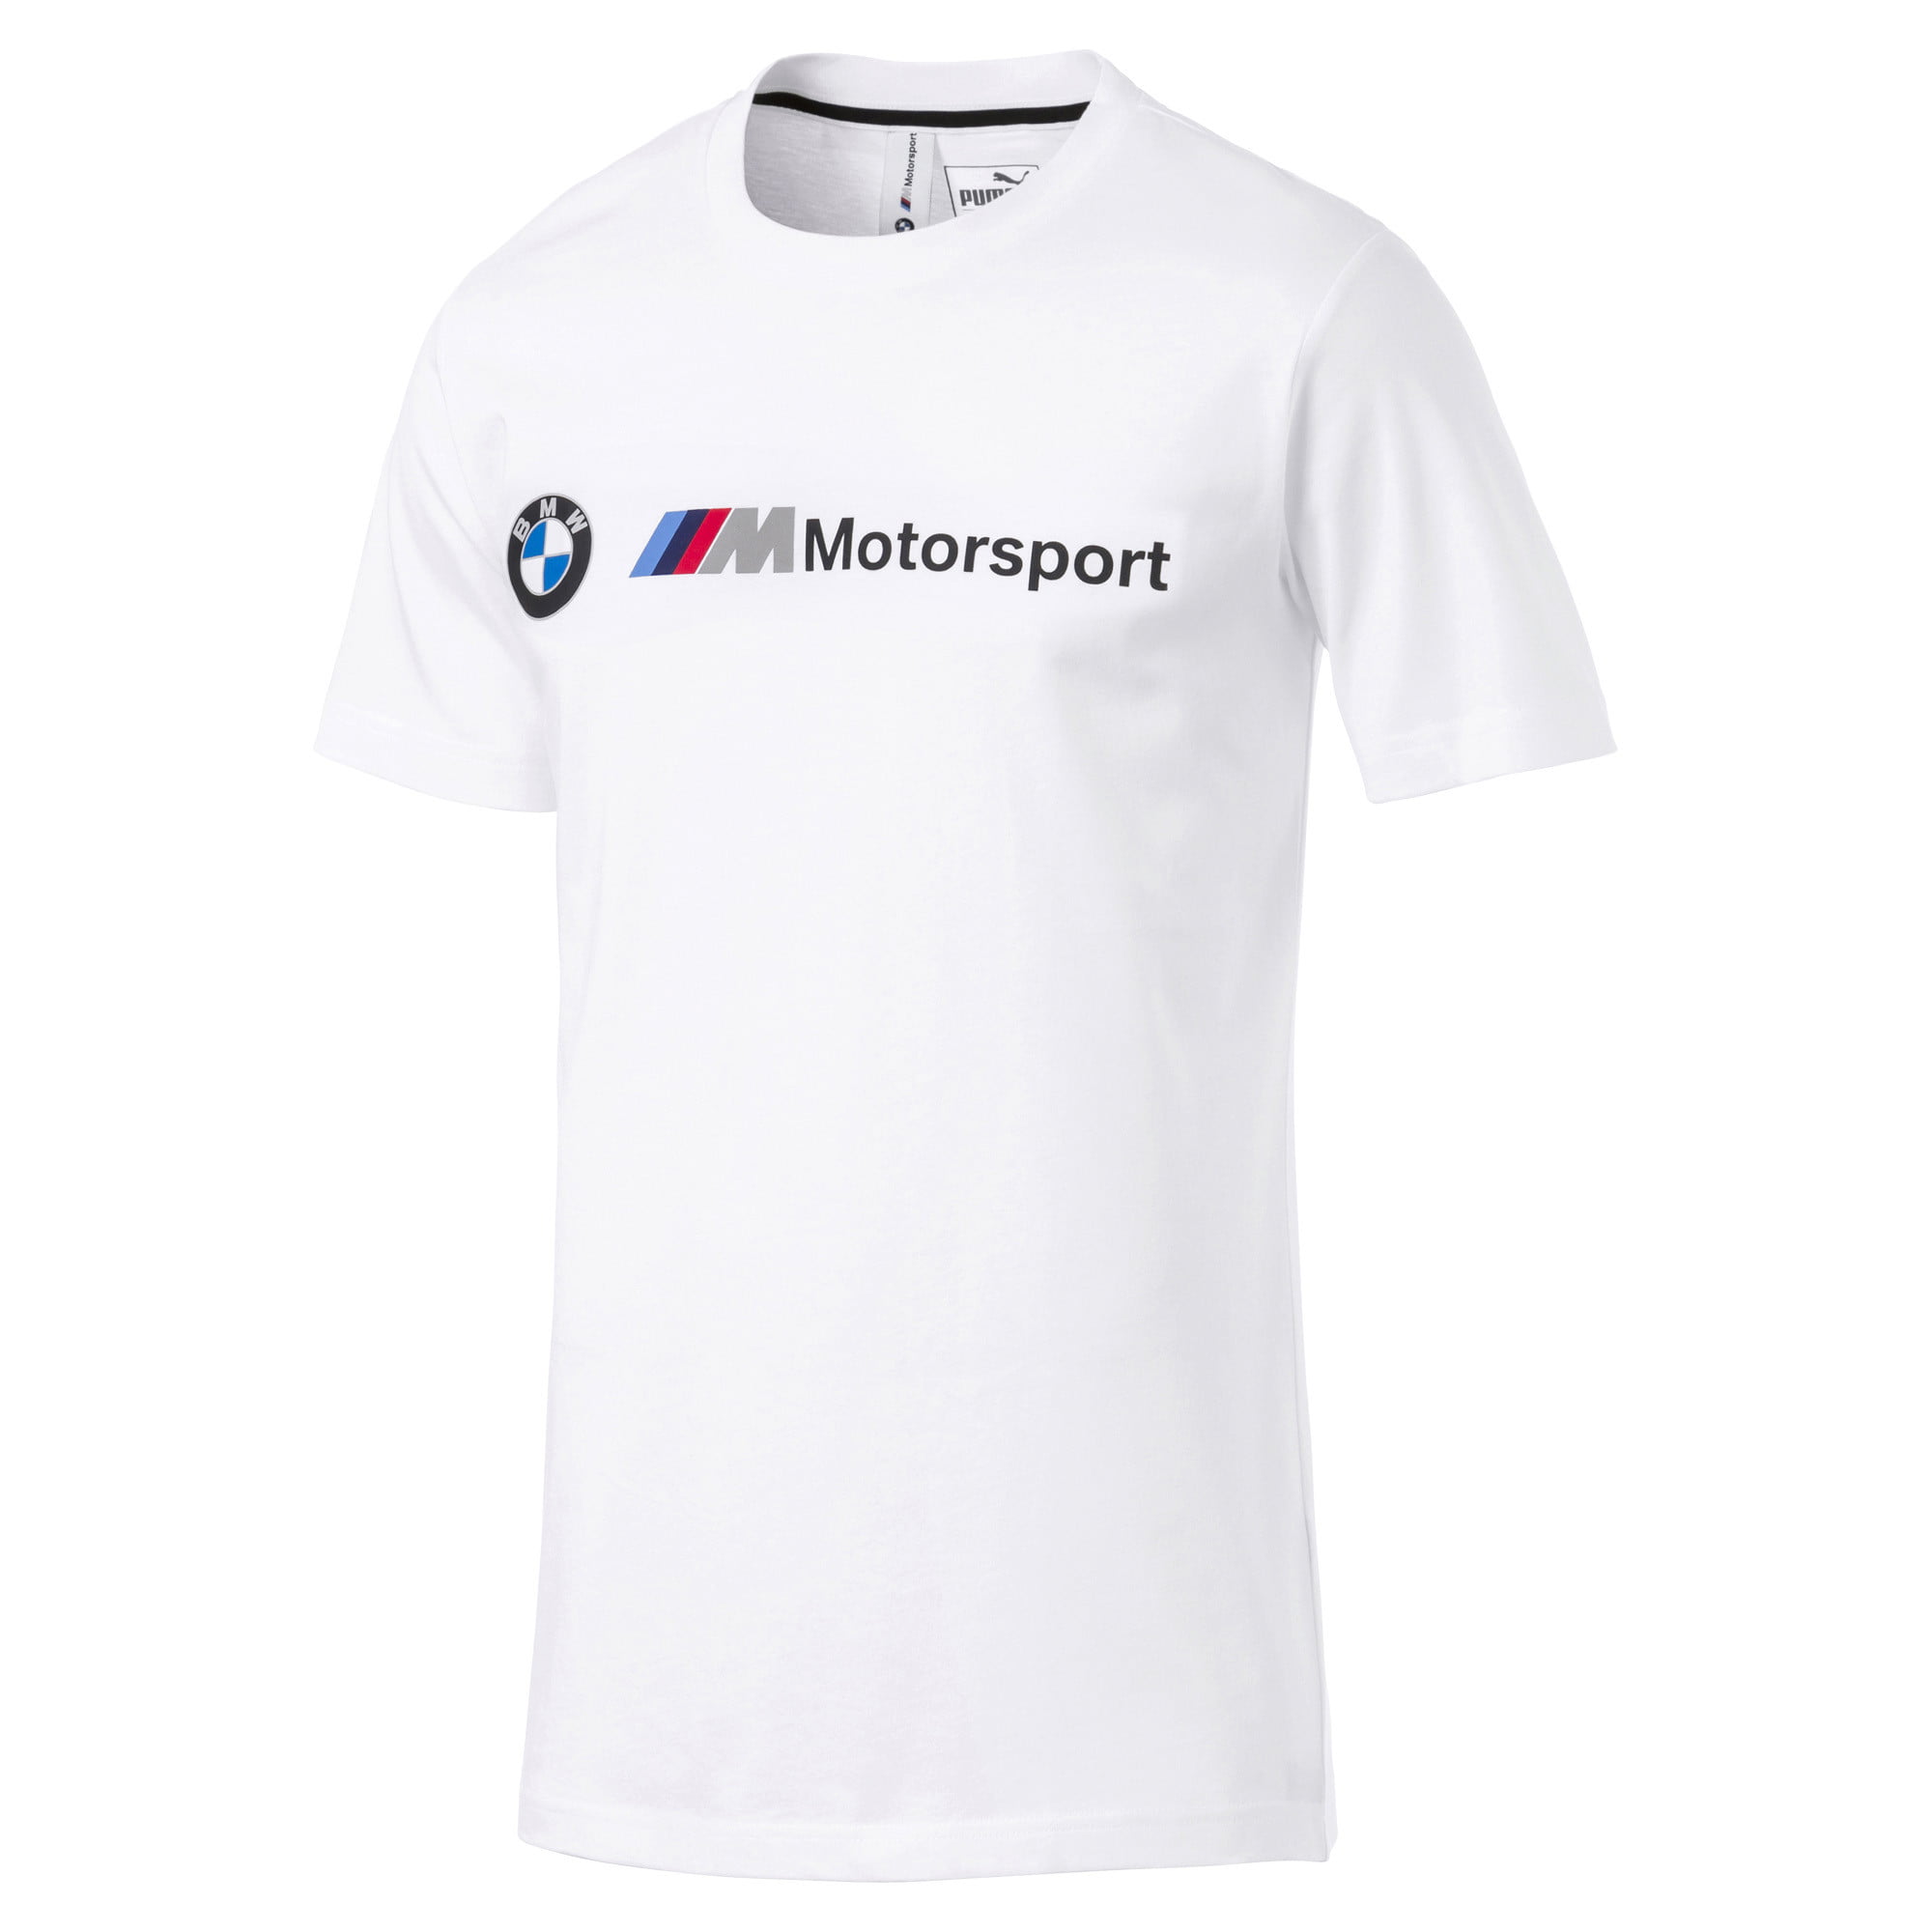 BMW Motorsport Puma White Tee Shirt 